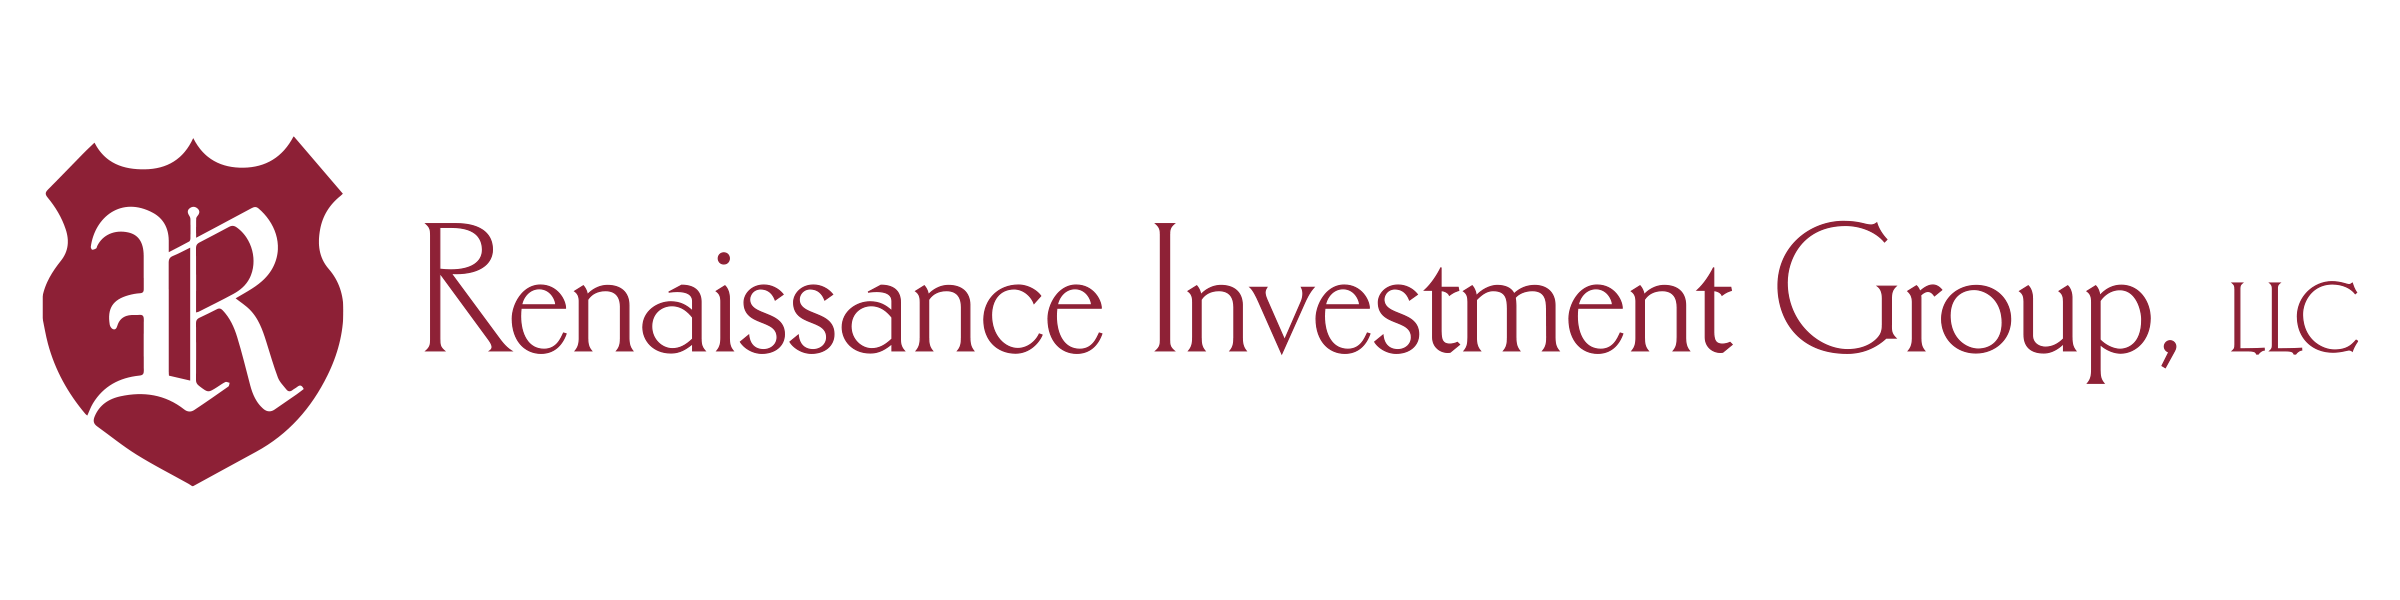 Renaissance Investment Group